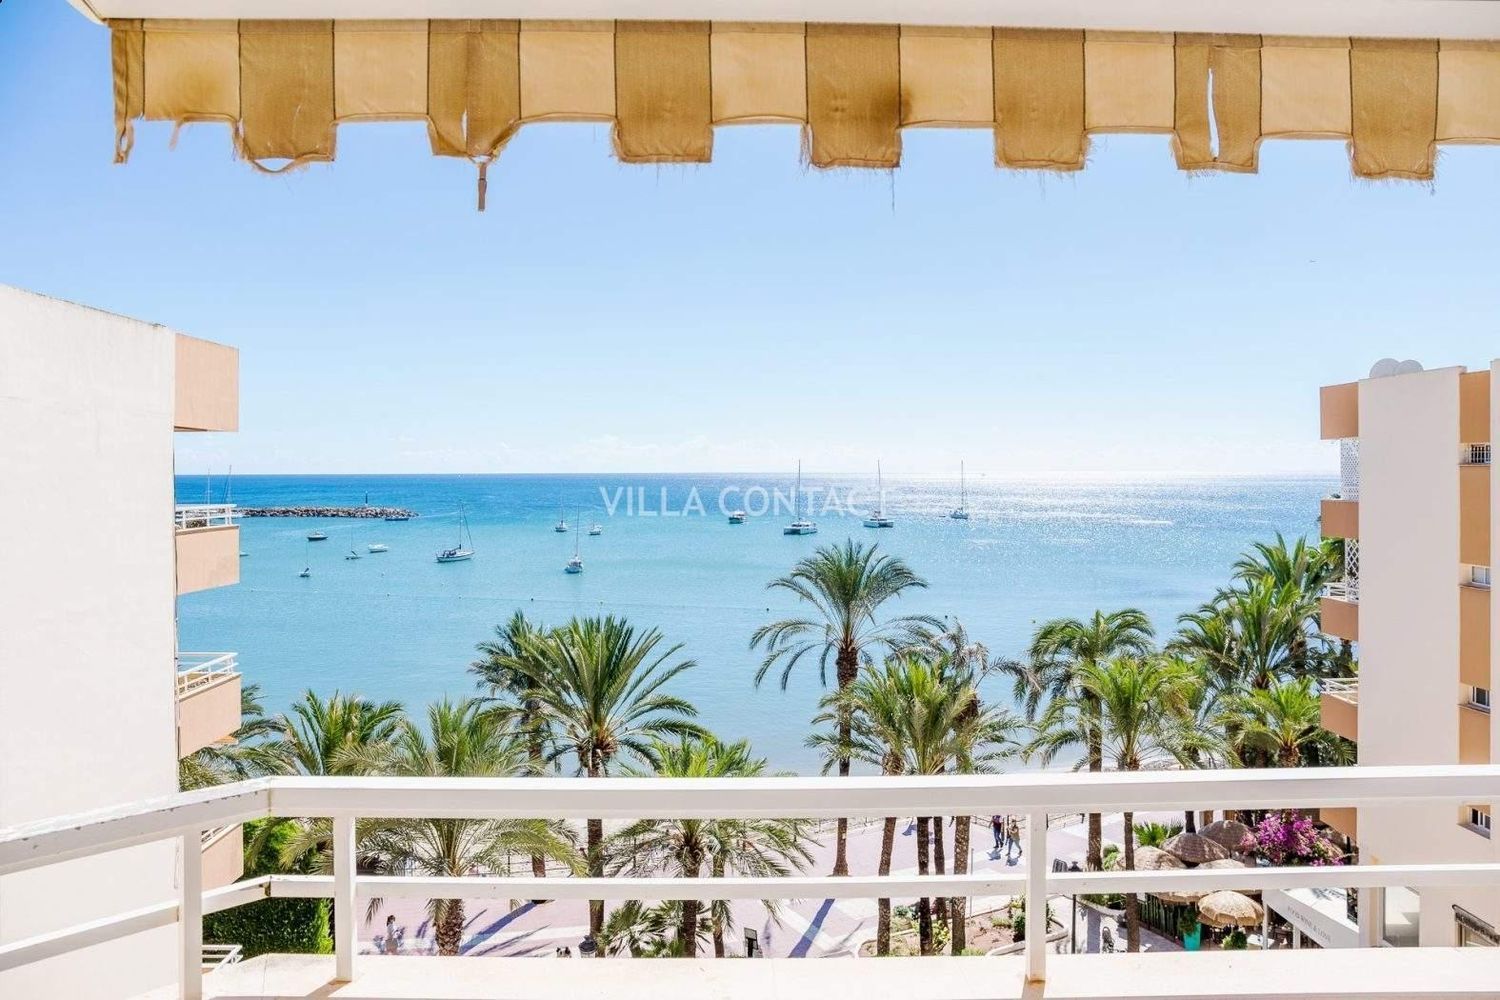 Apartamento para venda no Paseo Marítimo de Santa Eulalia del Río, em Ibiza